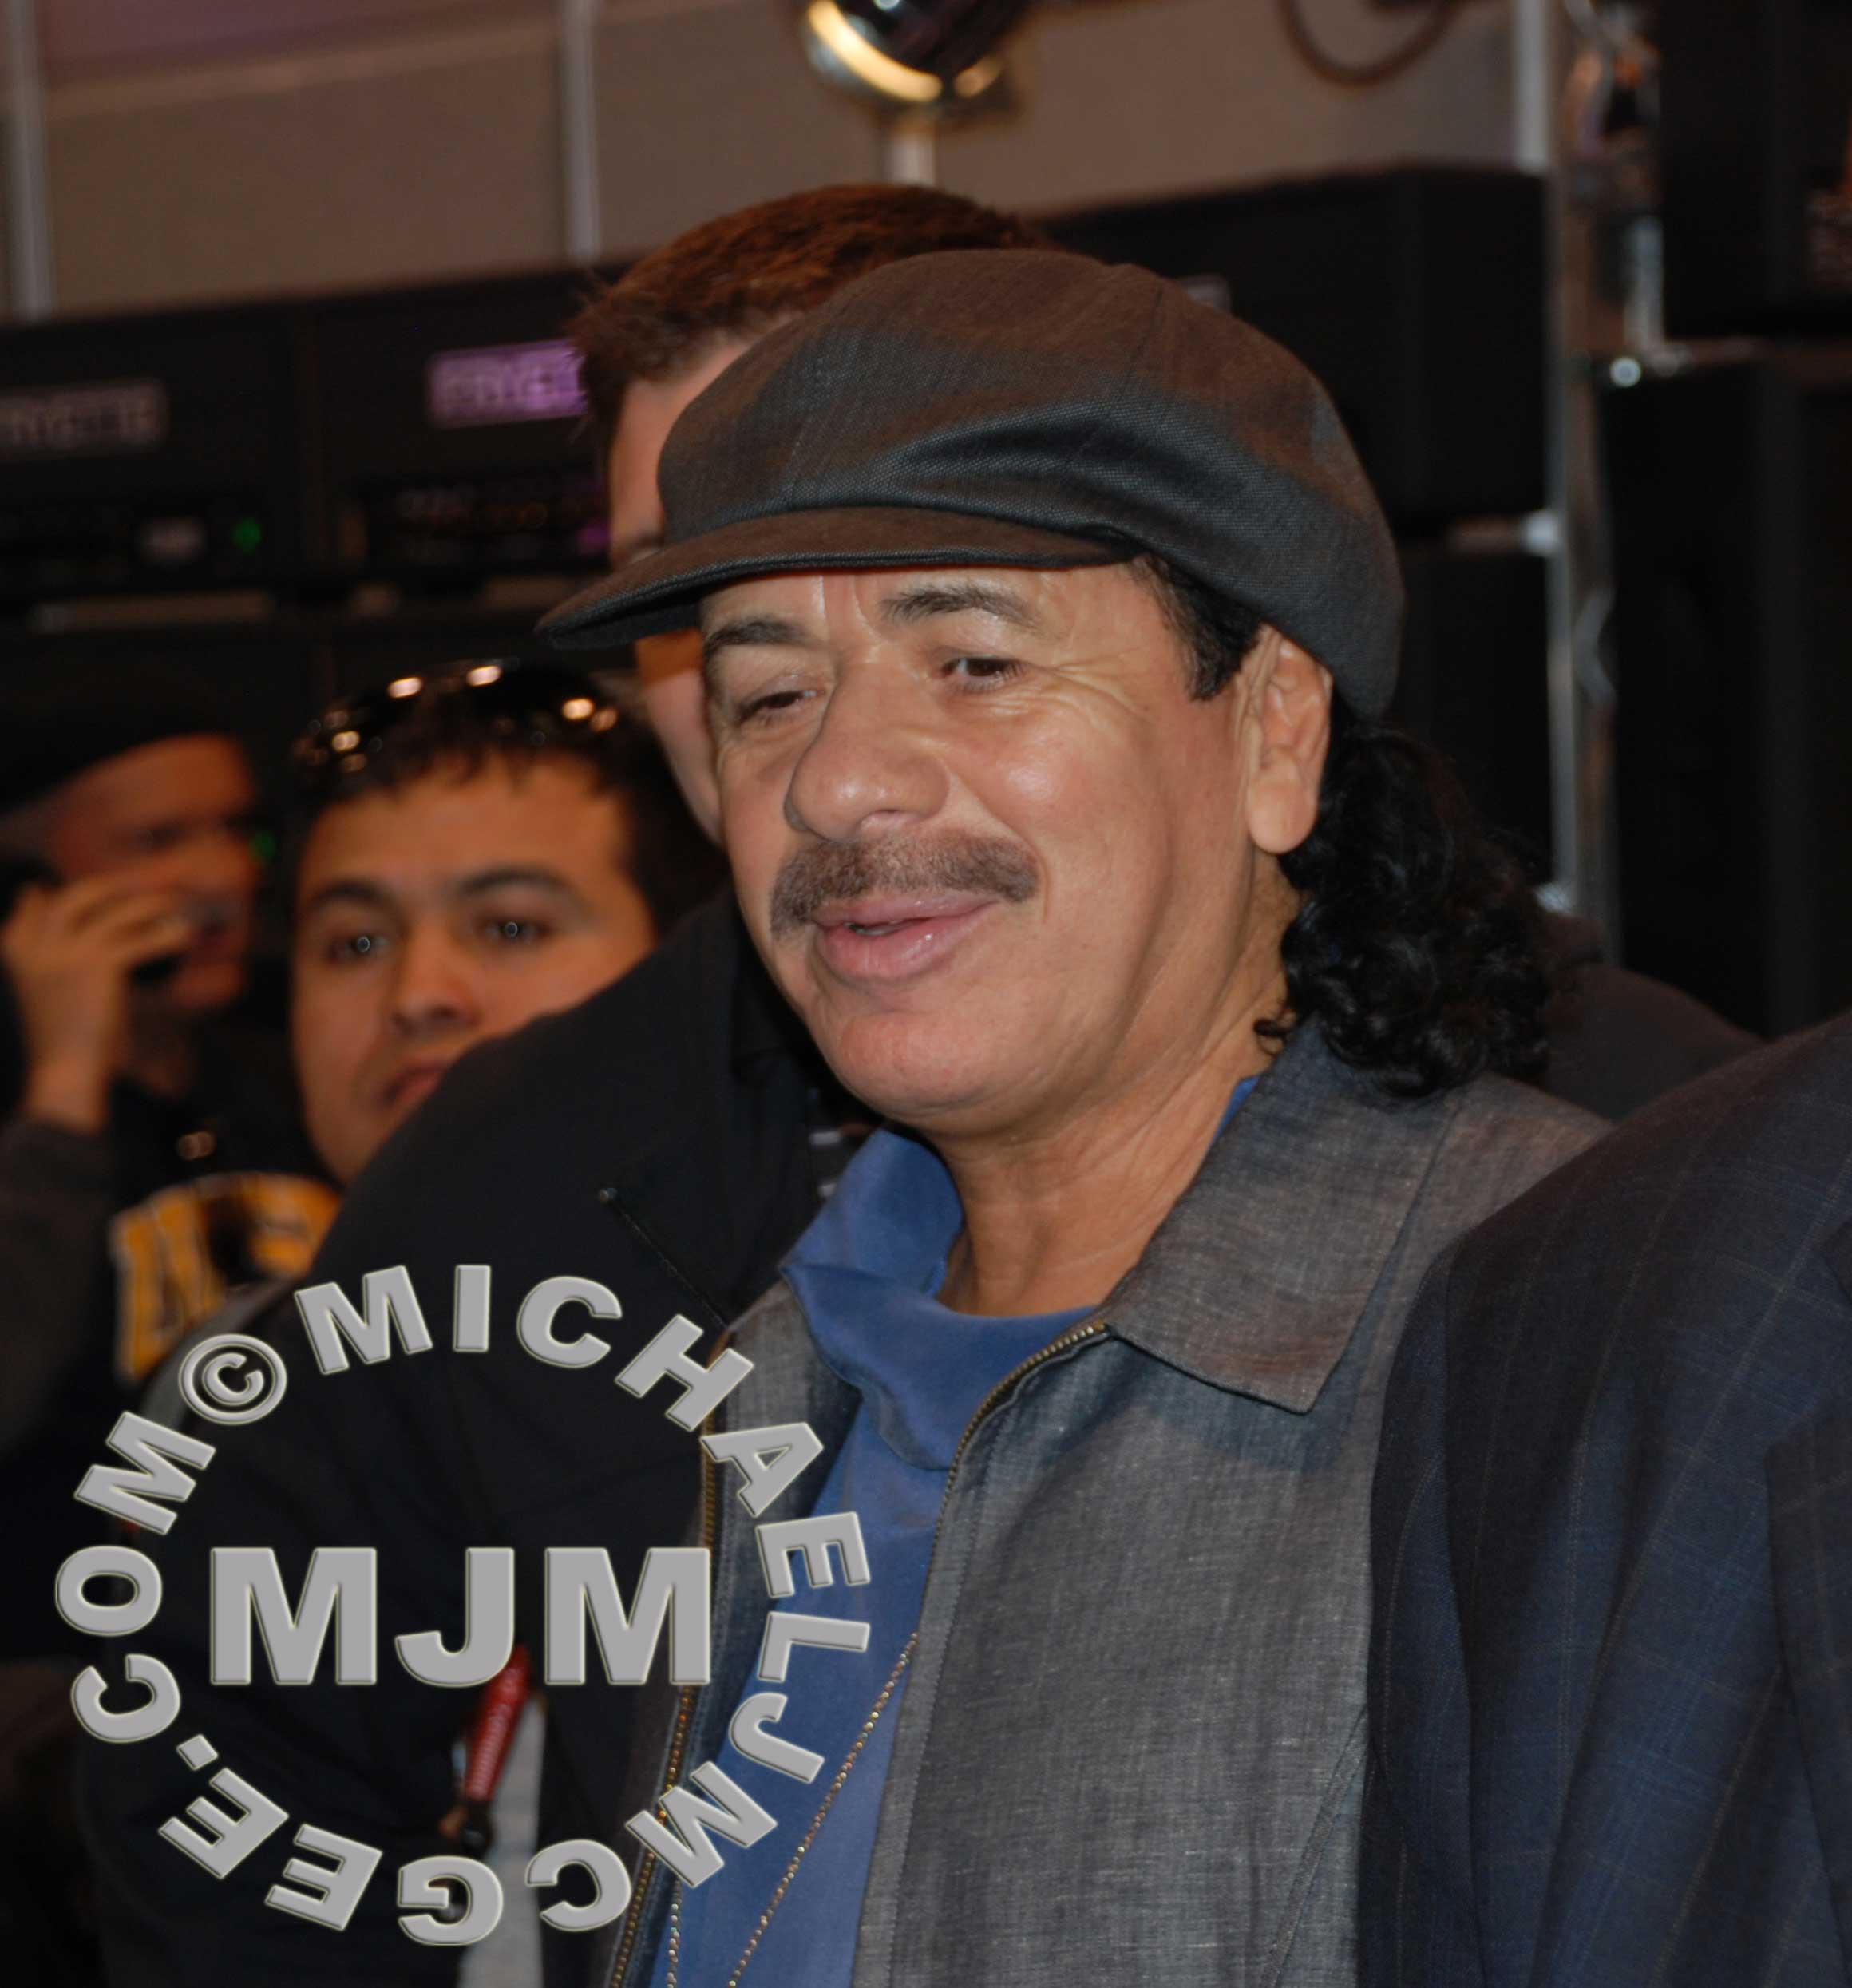 Carlos Santana / michaeljmcgee.com